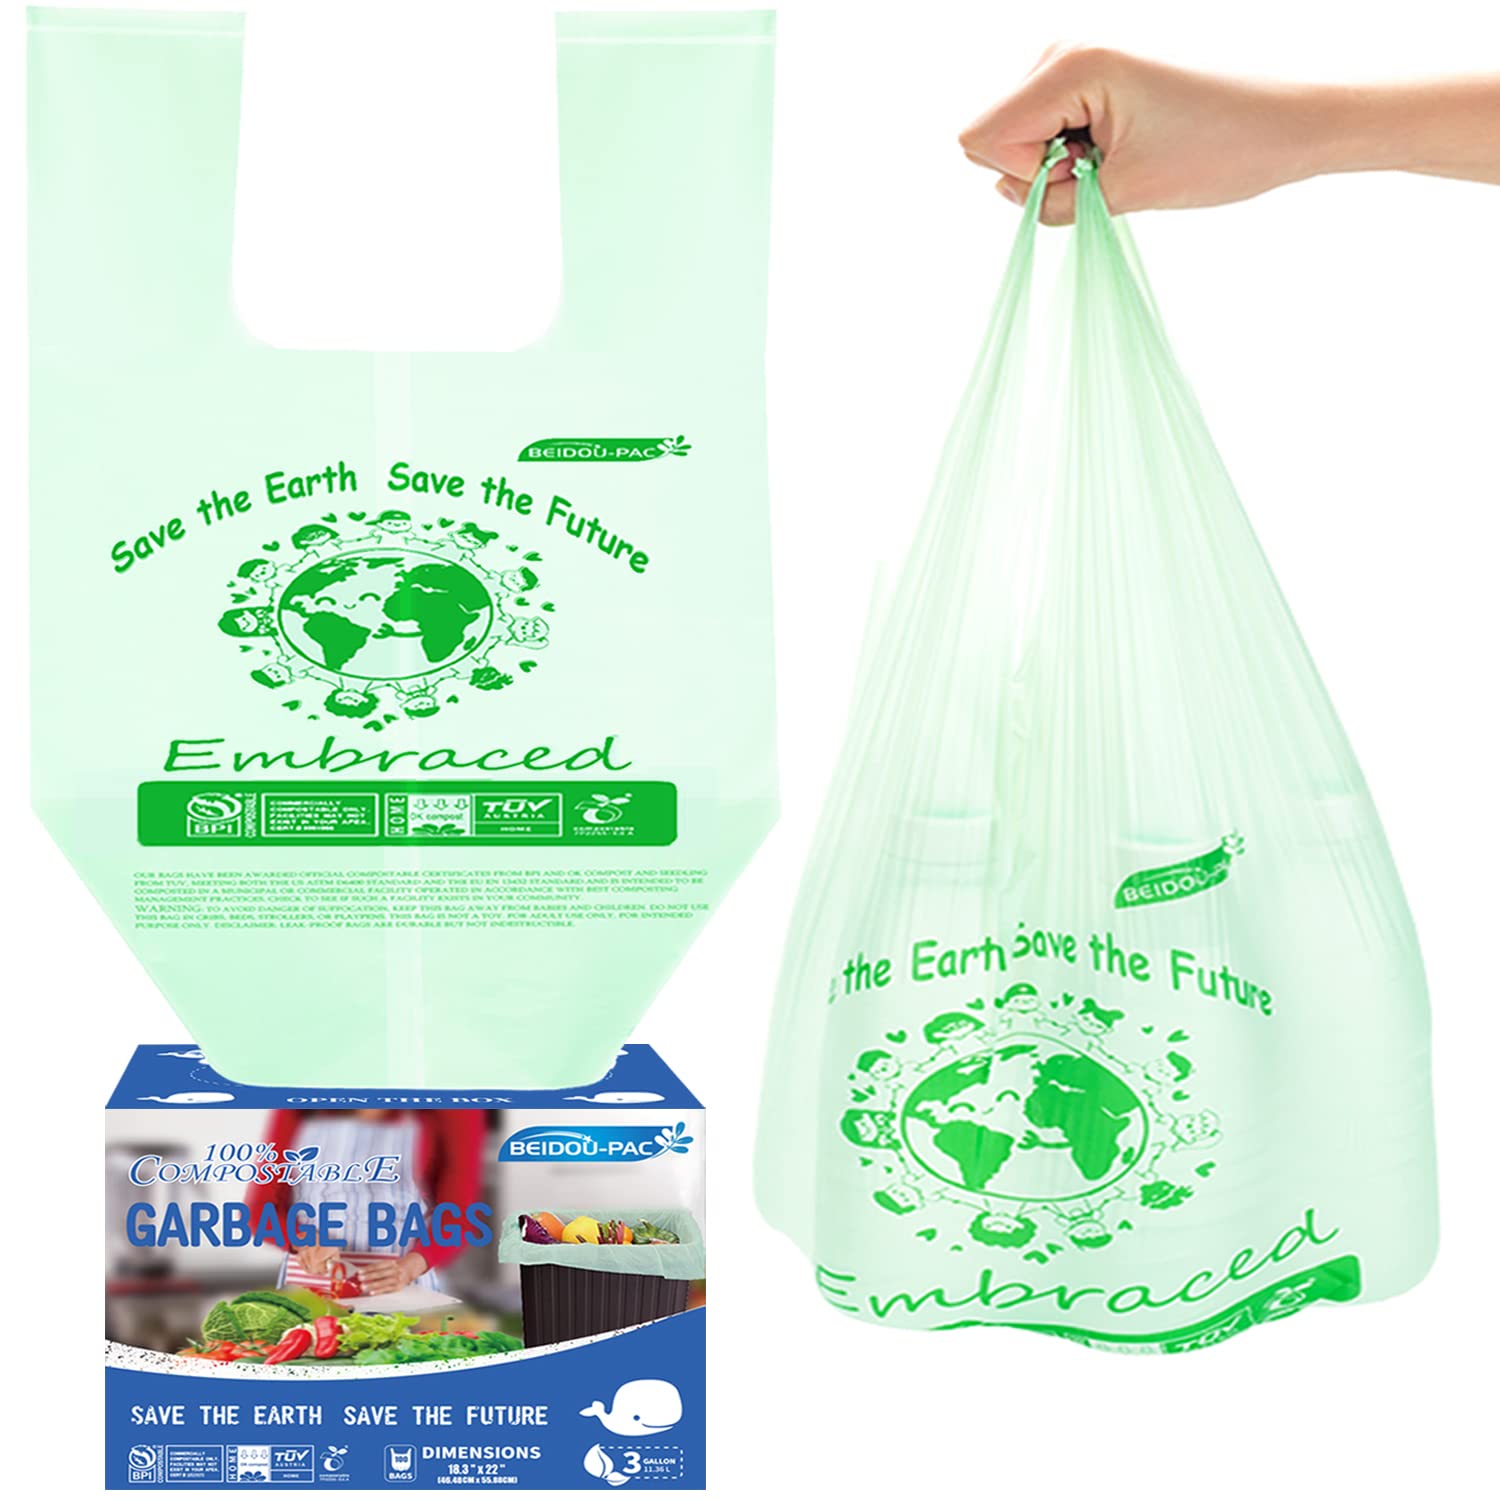 Compostable trash bags, Biodegradable plastic bags.